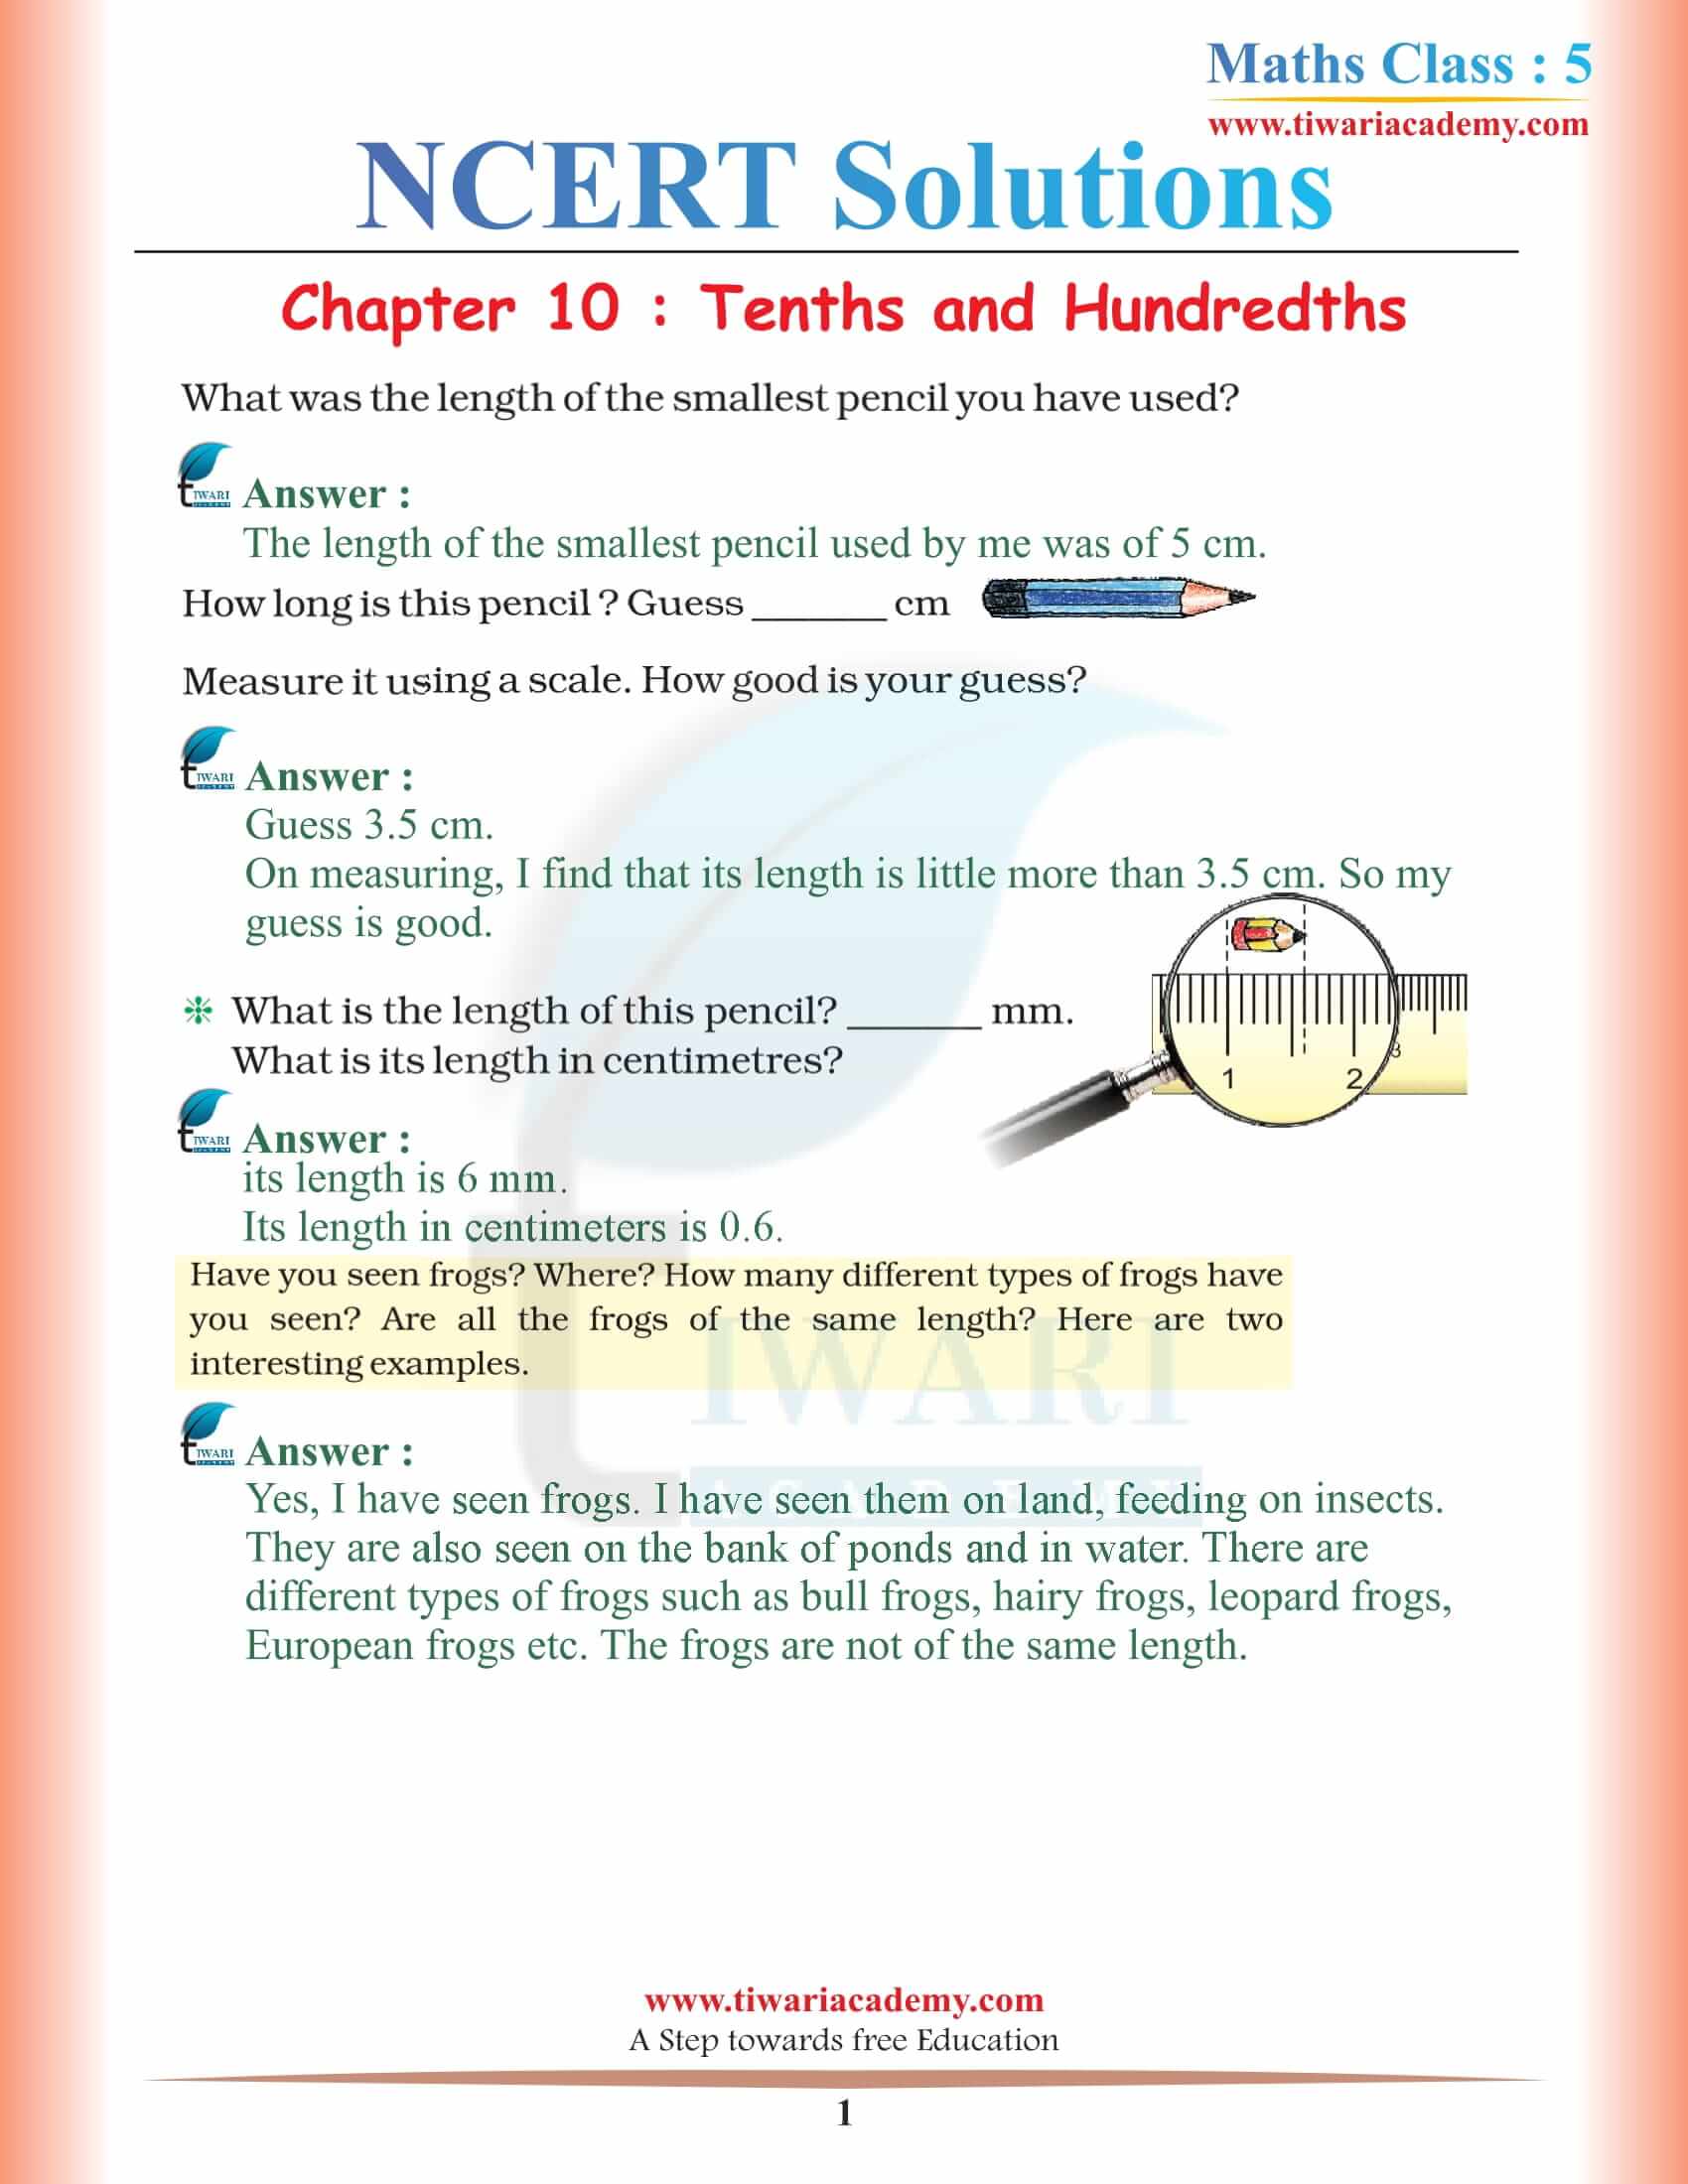 NCERT Solutions for Class 5 Maths Chapter 10 Tenths and Hundredths